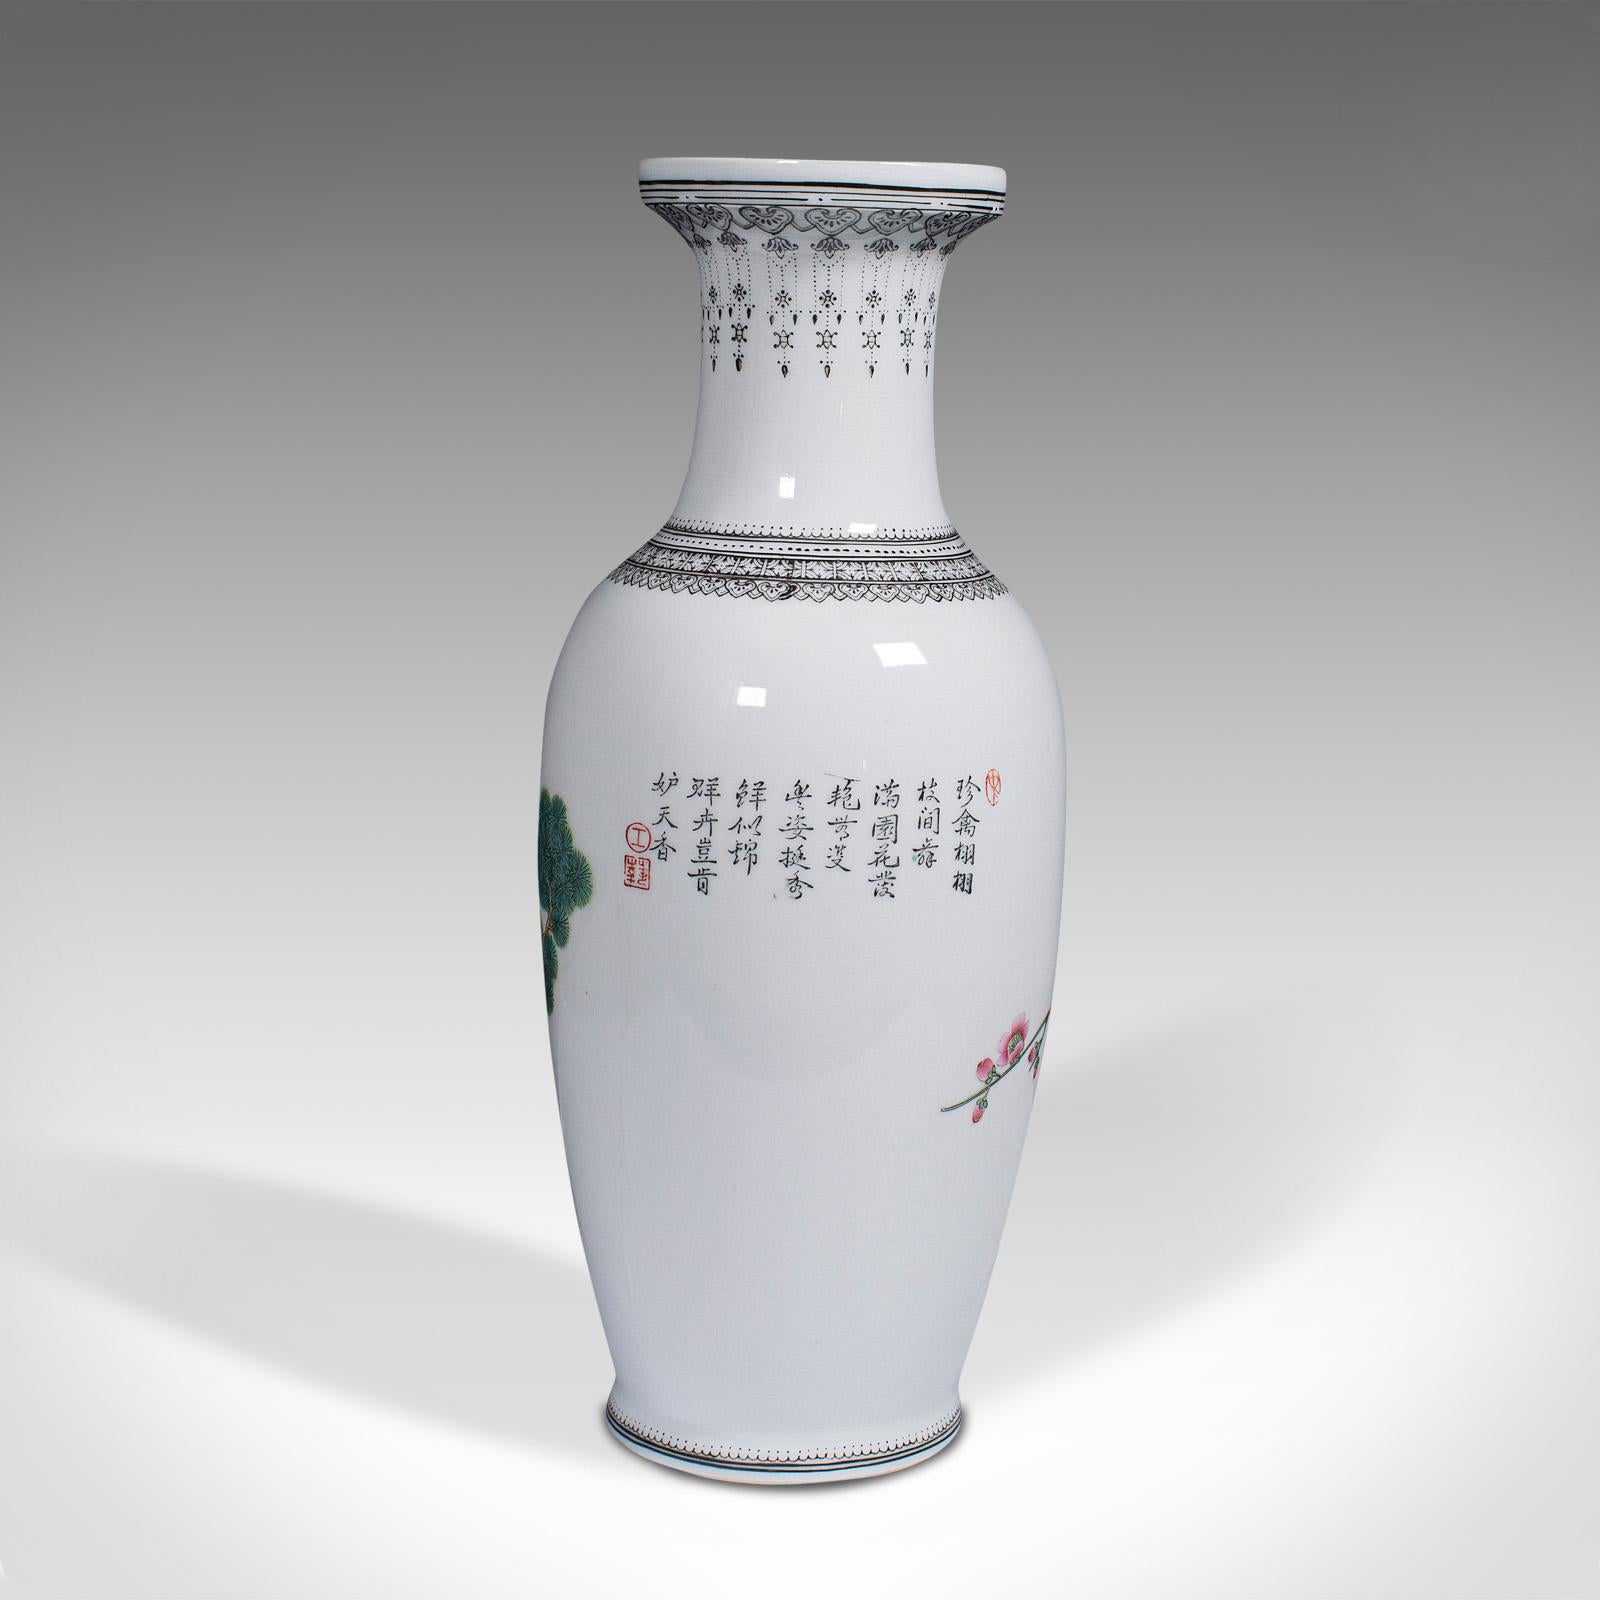 20th Century Vintage Decorative Posy Vase, Chinese, Ceramic Flower Urn, Peacock Motif, C.1960 For Sale